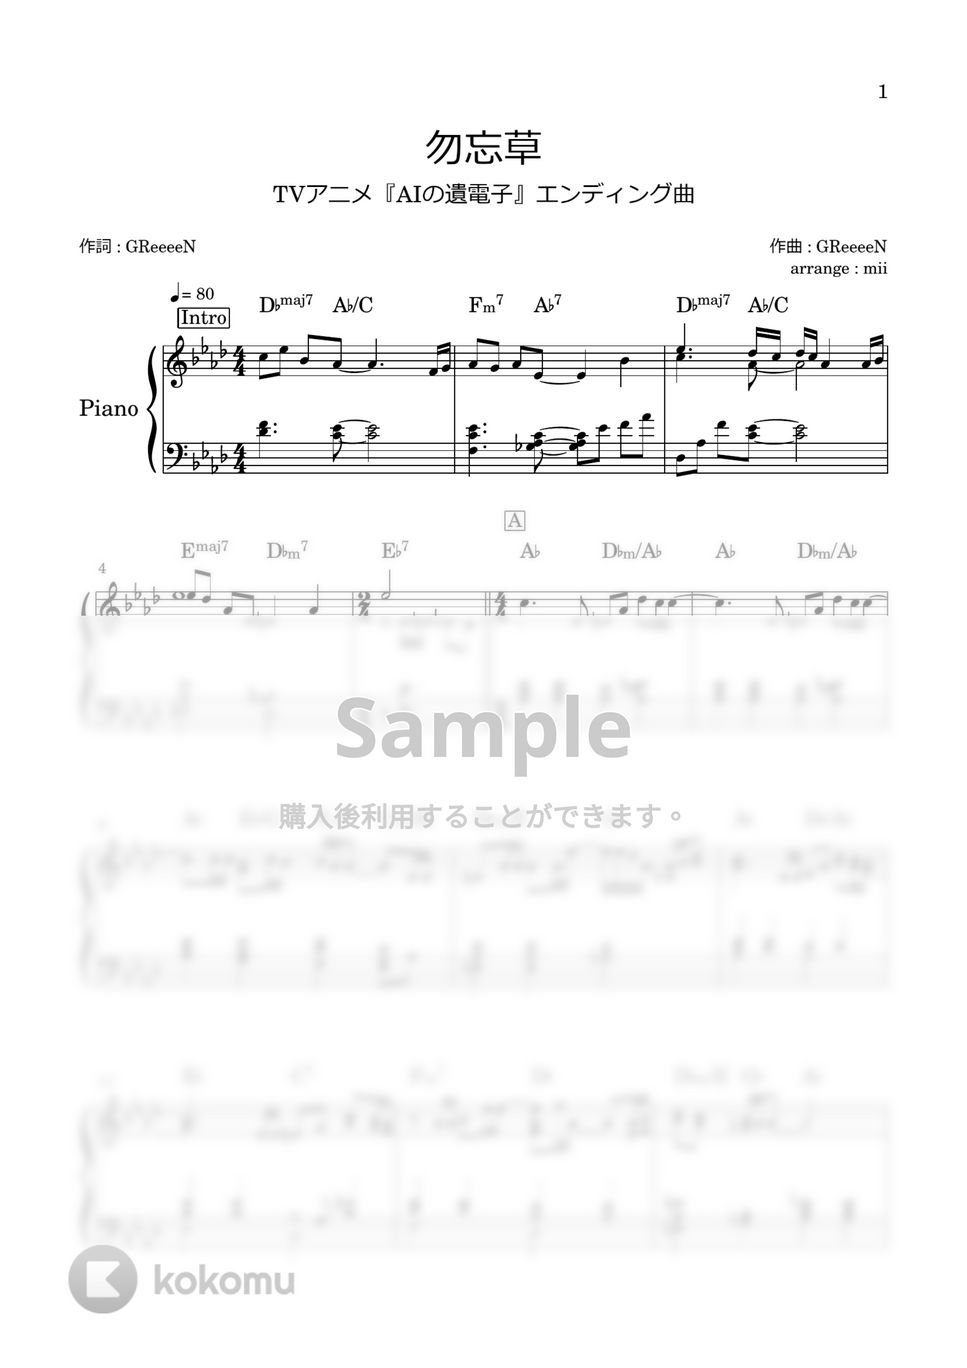 GReeeeN - 勿忘草 by miiの楽譜棚